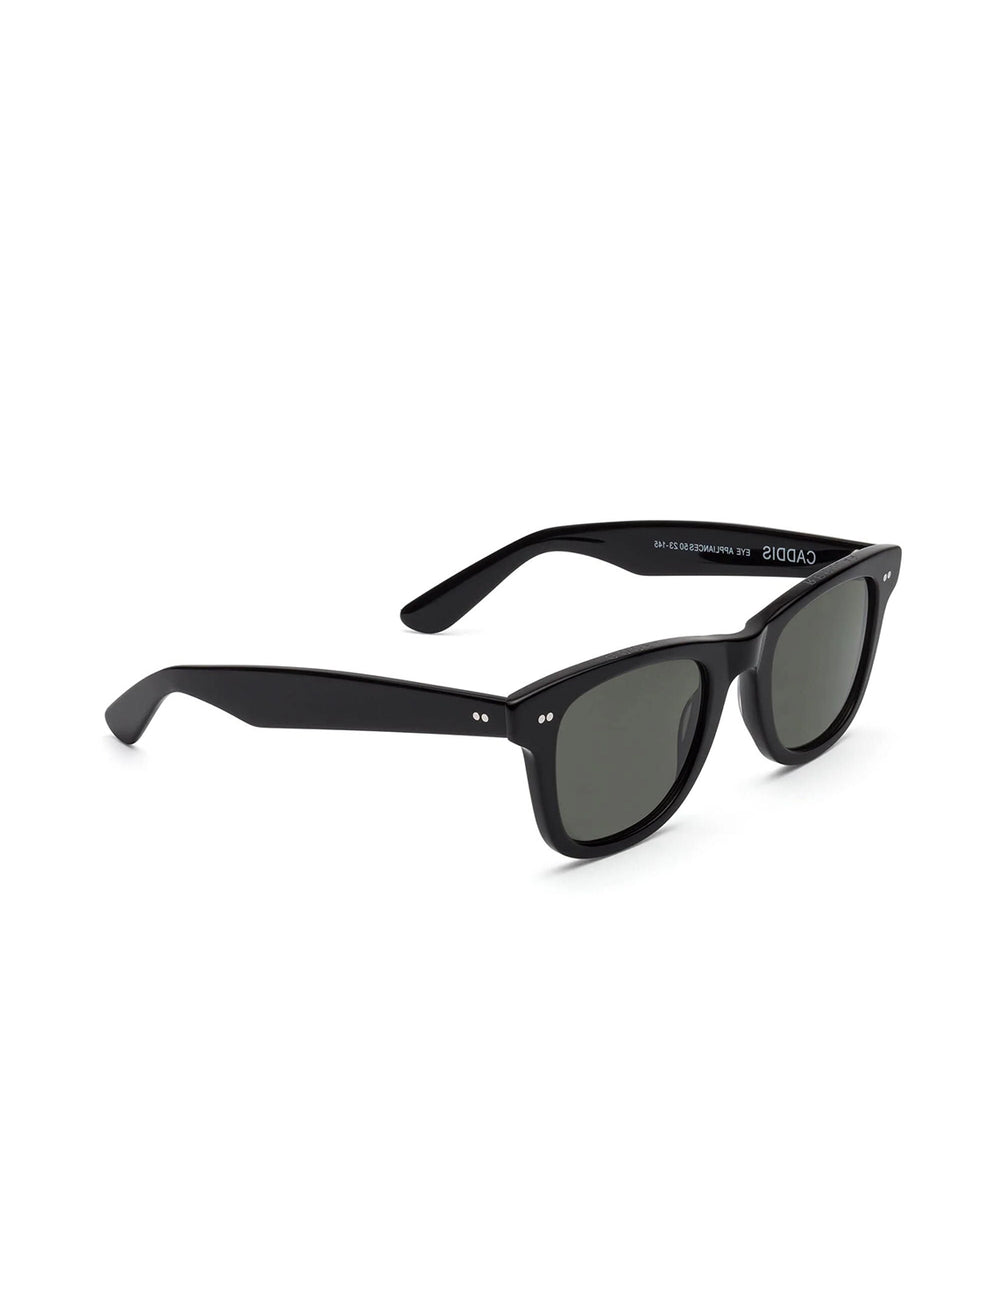 Side angle view of Caddis' porgy progressive sunglasses in gloss black.